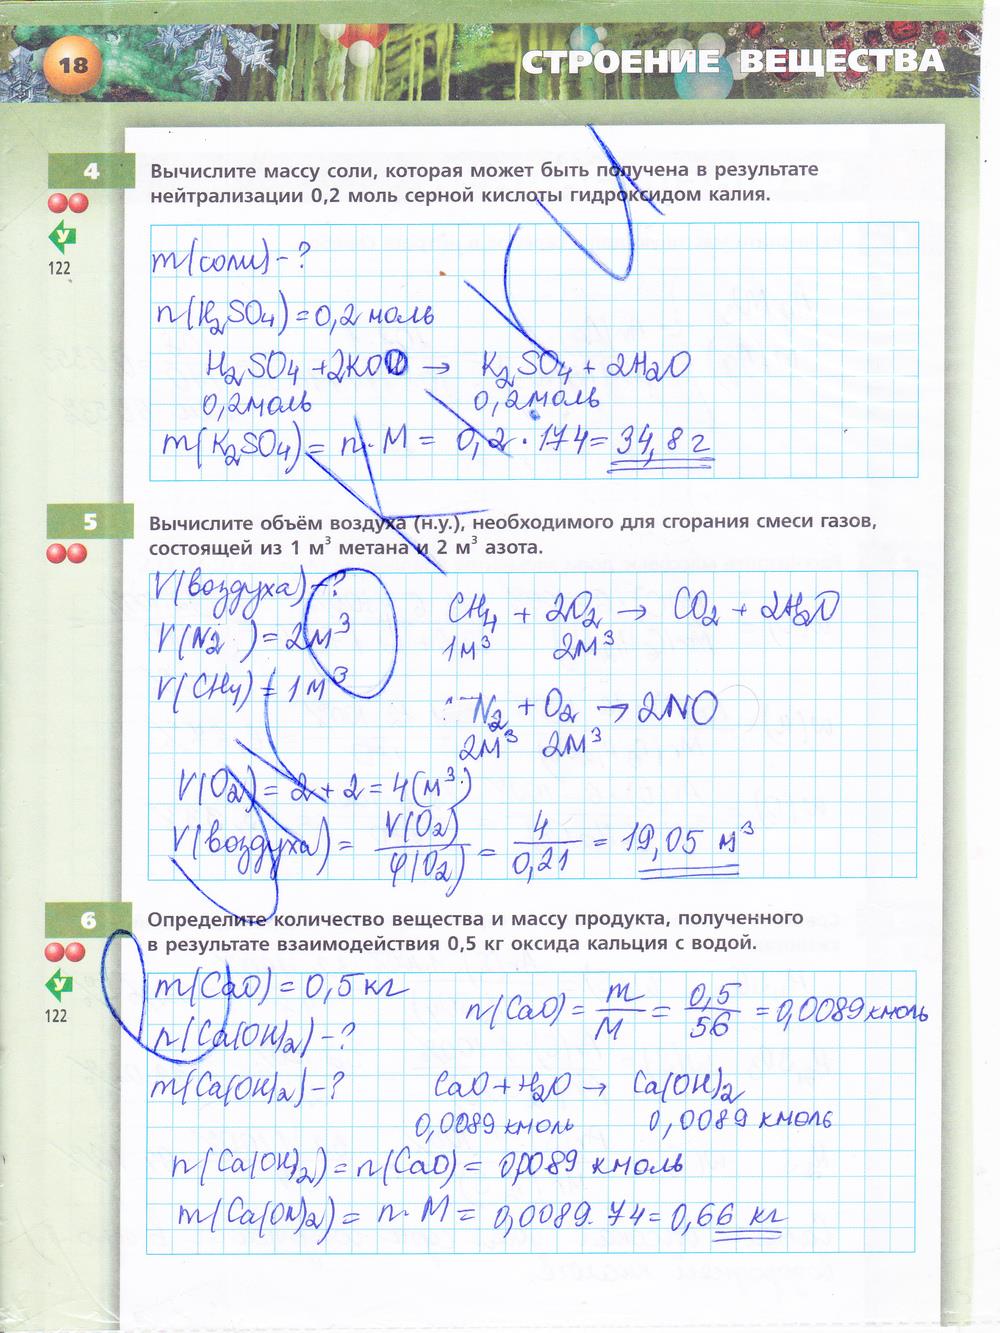 гдз 9 класс тетрадь-тренажёр страница 18 химия Гара